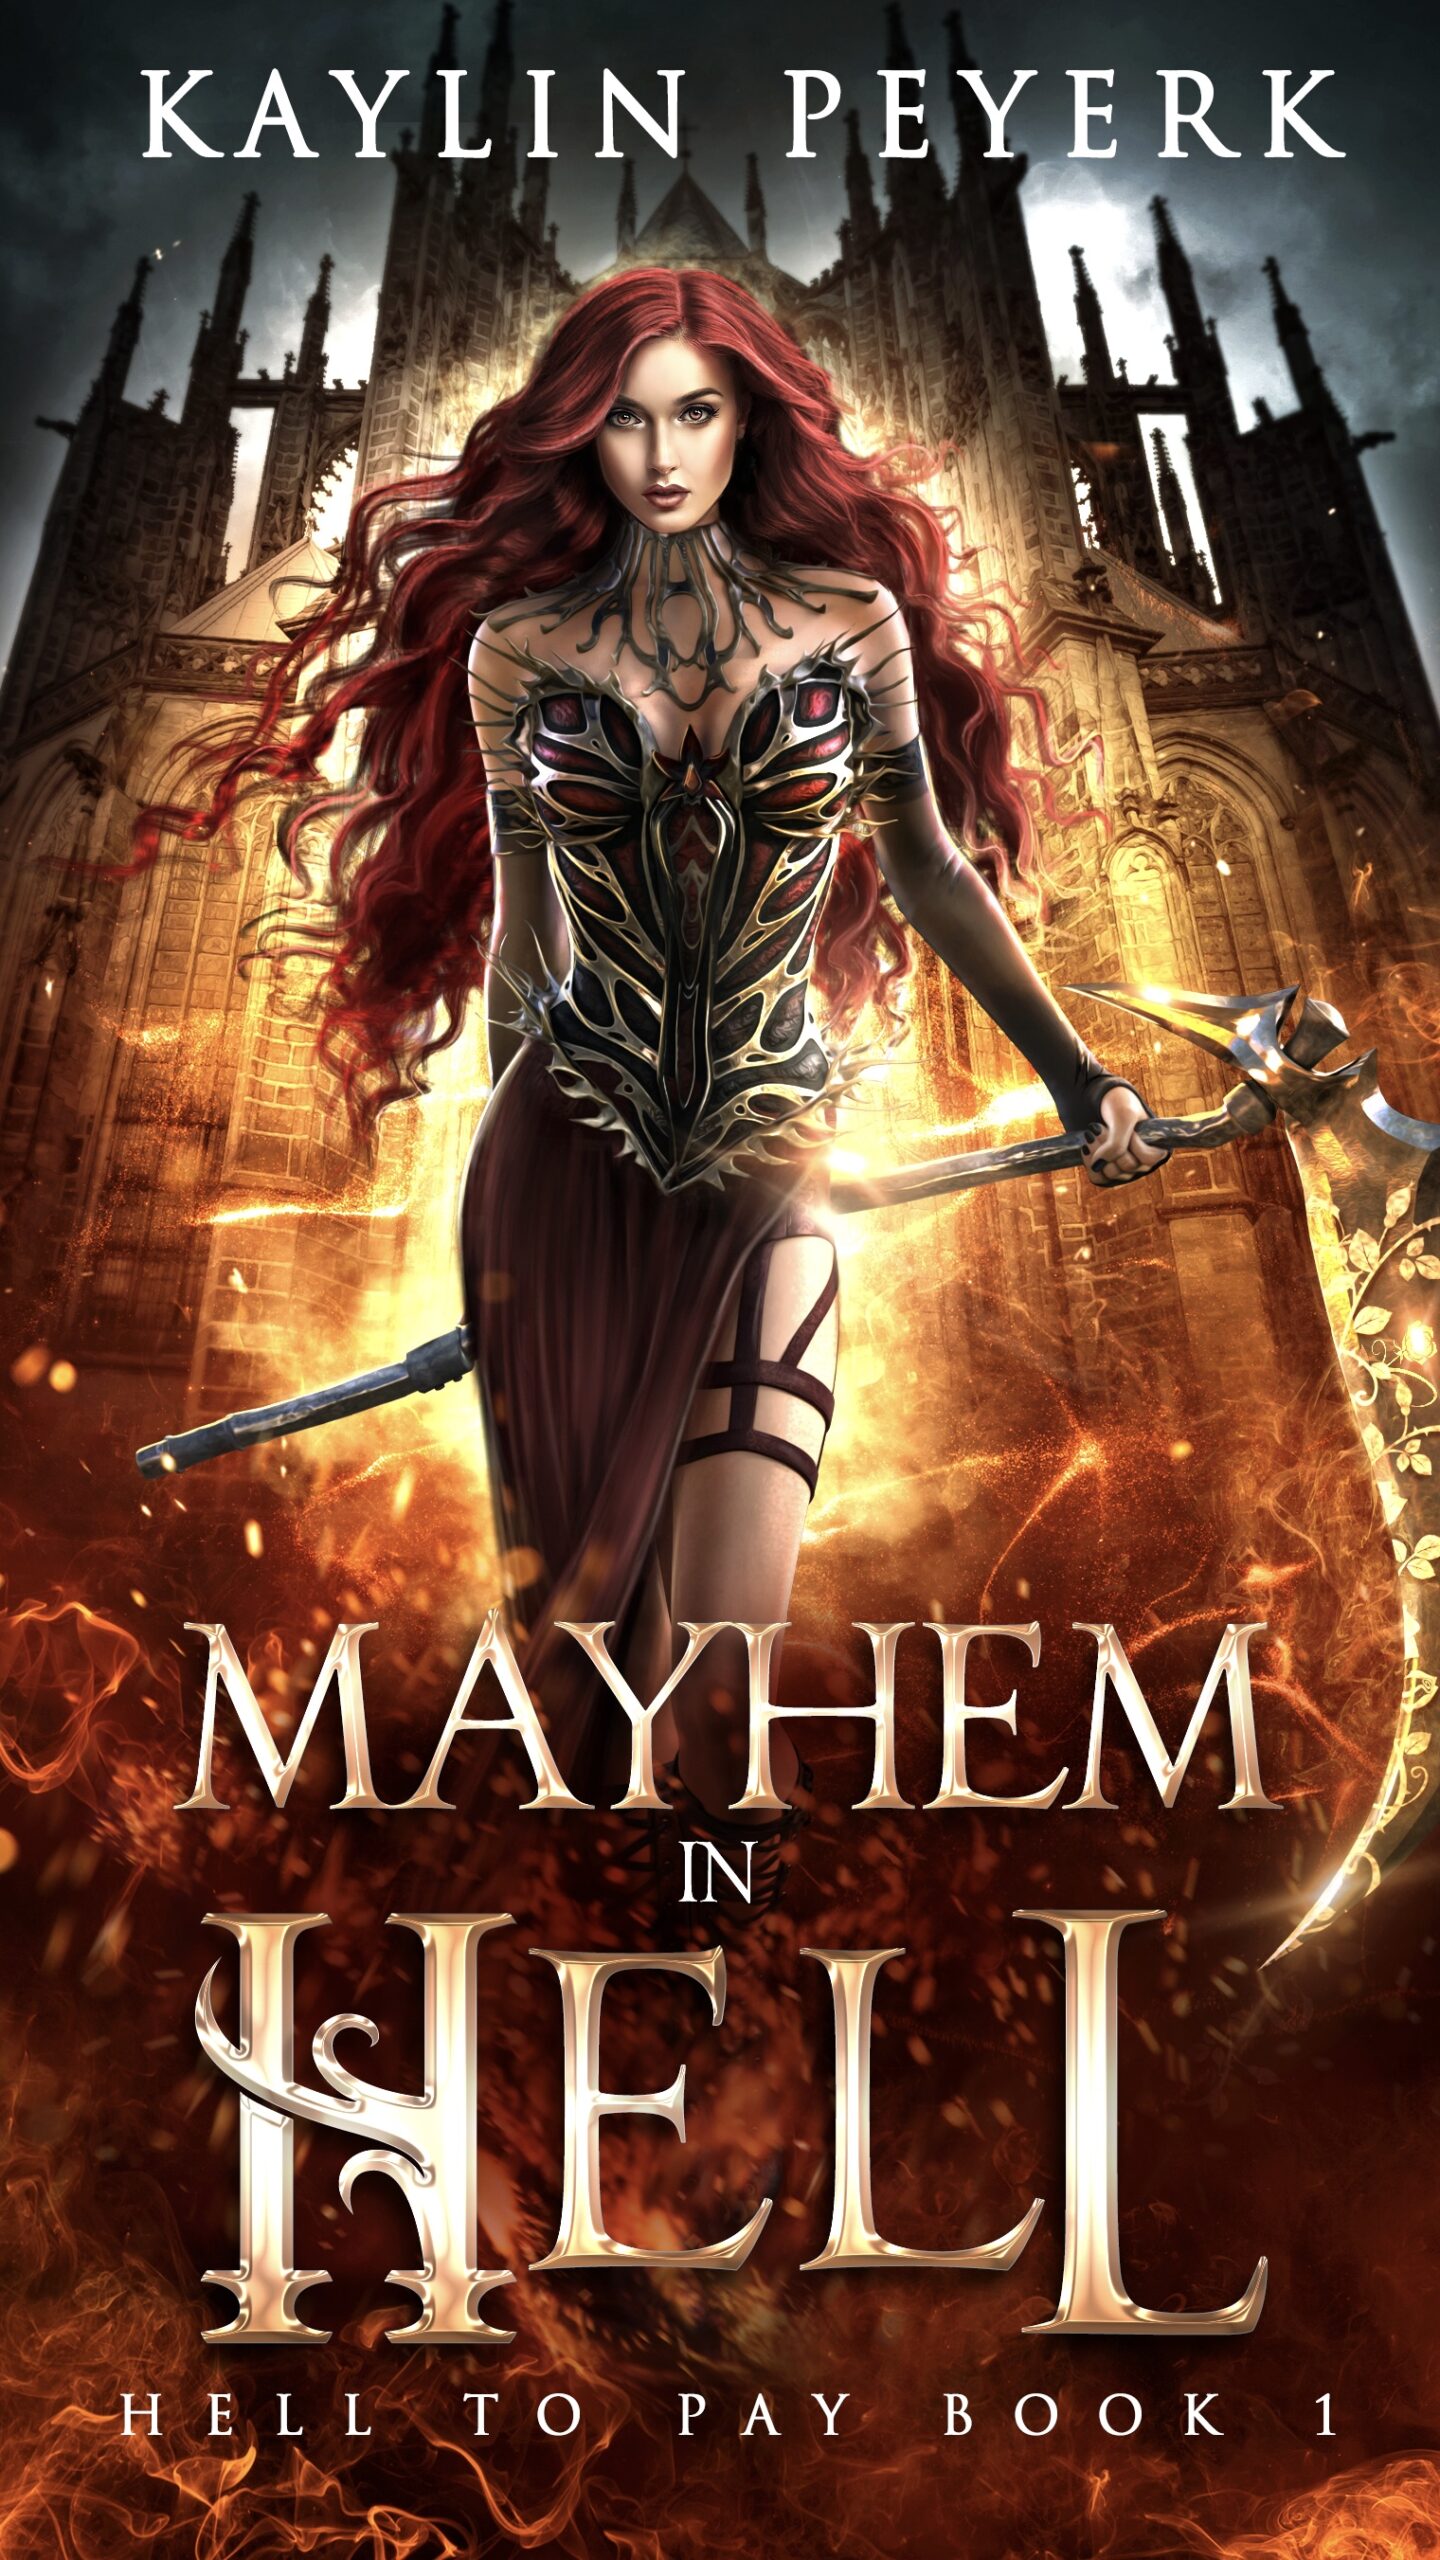 FREE: Mayhem in Hell by Kaylin Peyerk